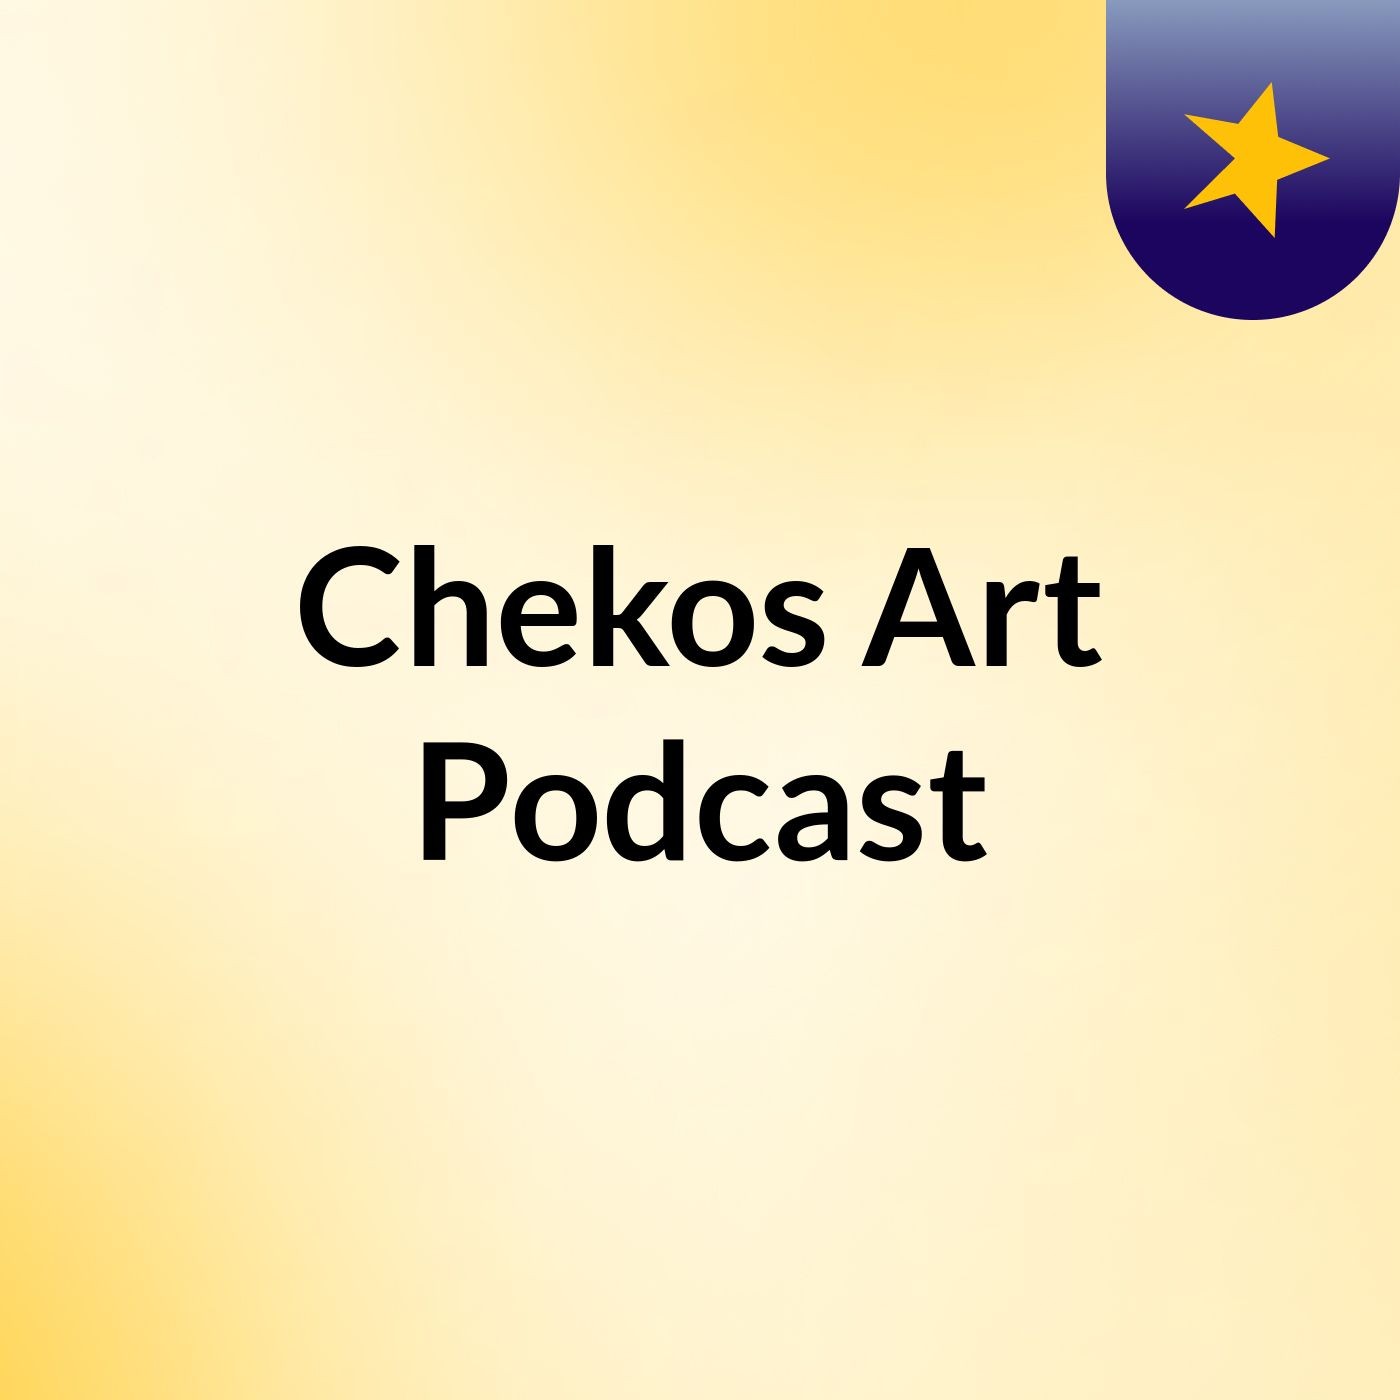 Chekos Art Podcast